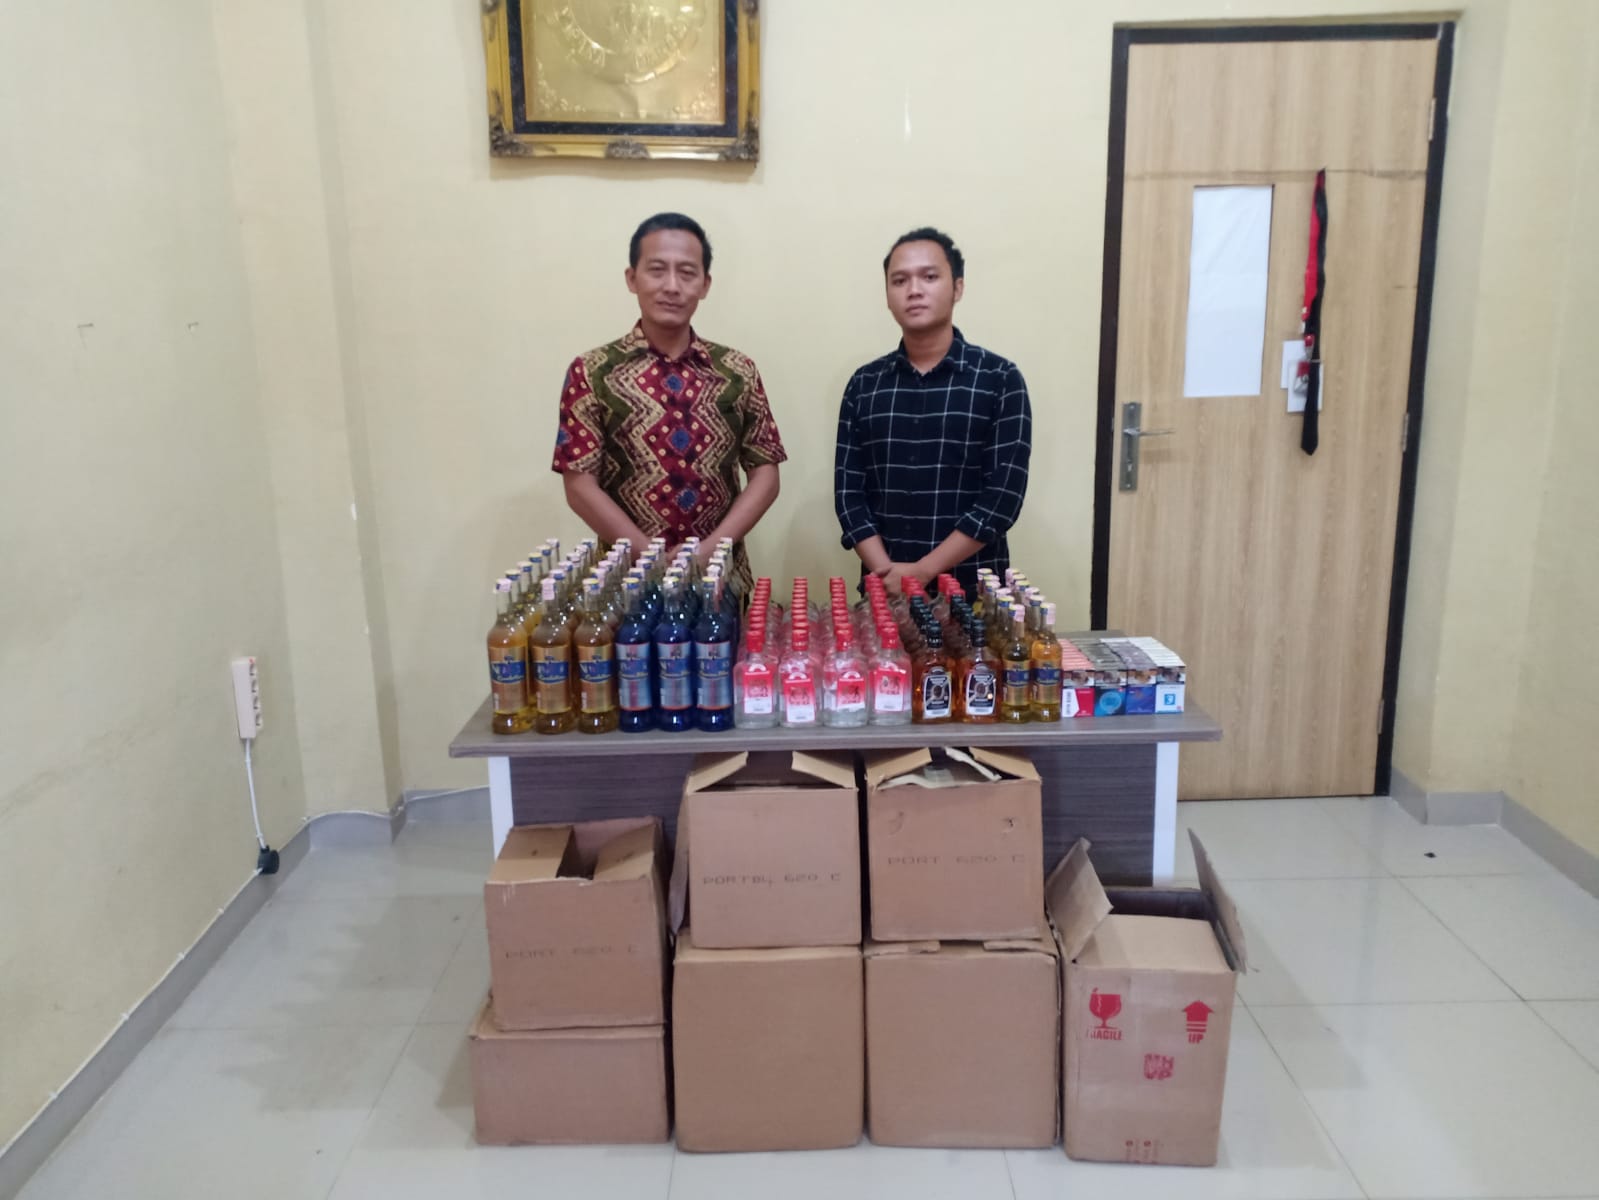 Sebanyak enam dus minuman keras dan 36 bungkus rokok tanpa cukai disita aparat kepolisian, di salah satu toko milik warga di Desa Karang Anyar, Kecamatan Sikap Dalam, Kabupaten Empat Lawang.